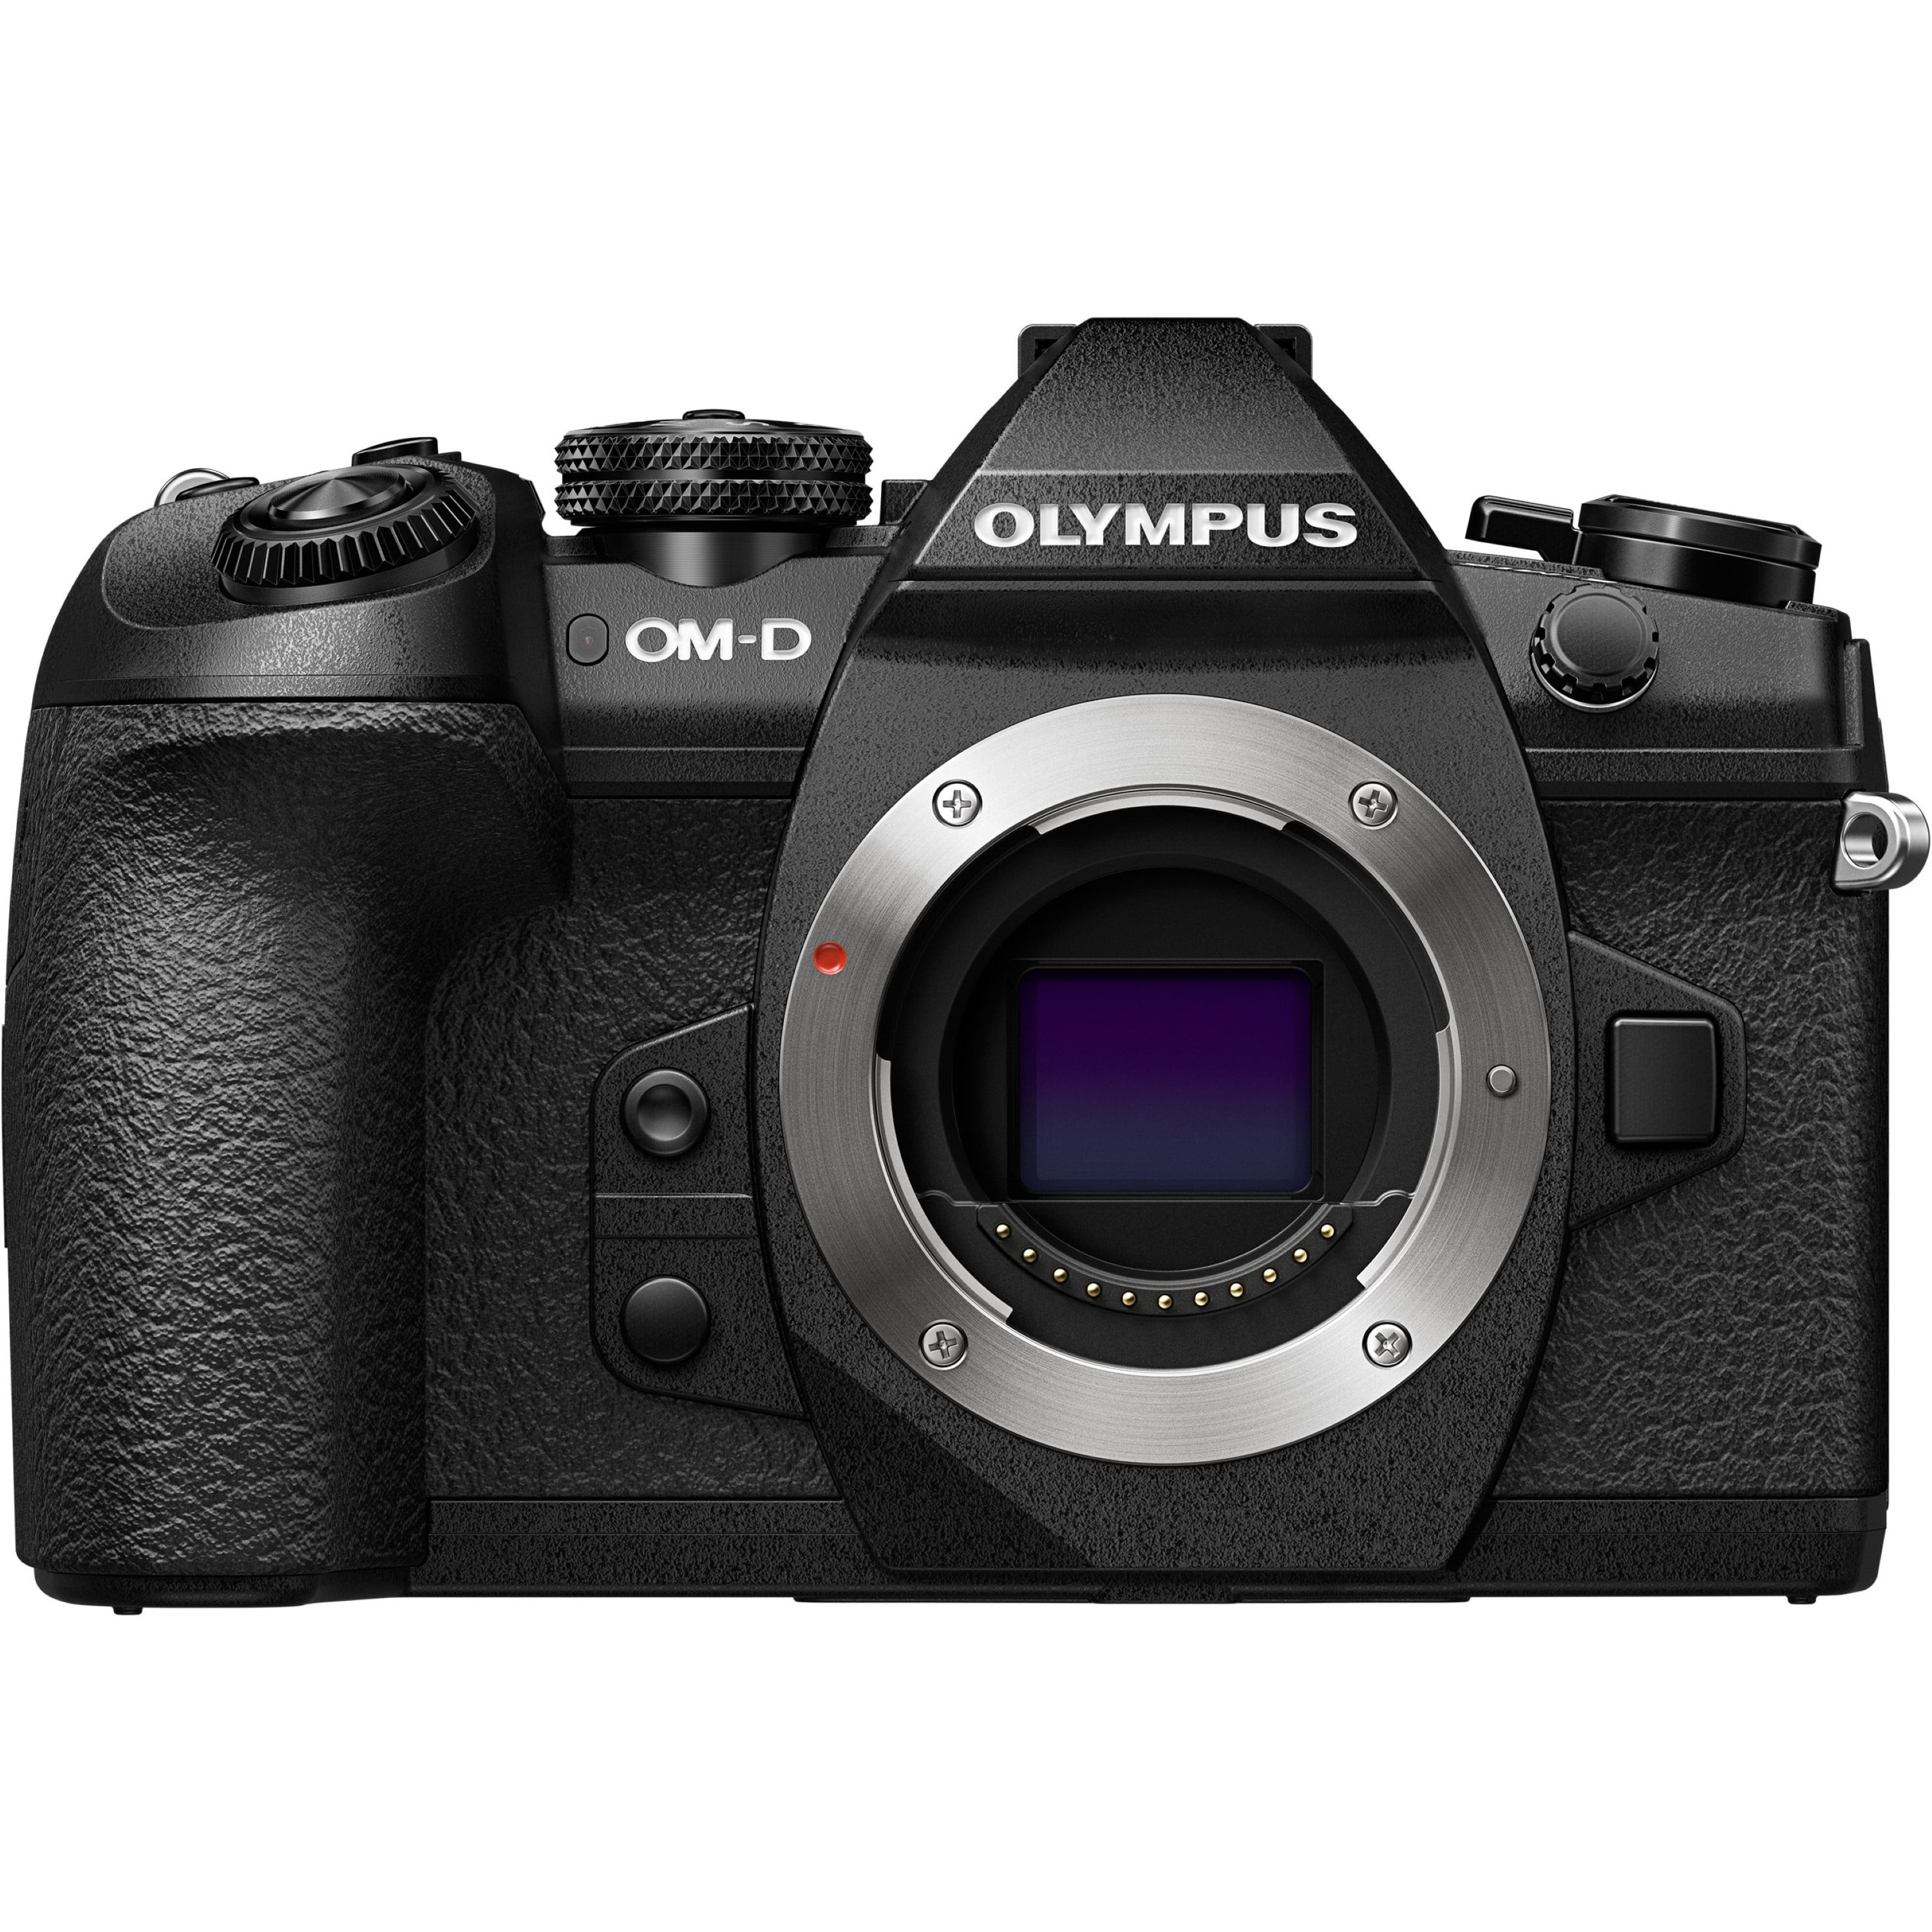 Olympus OM-D E-M5 Mark II Mirrorless Camera (Body Only), Silver 